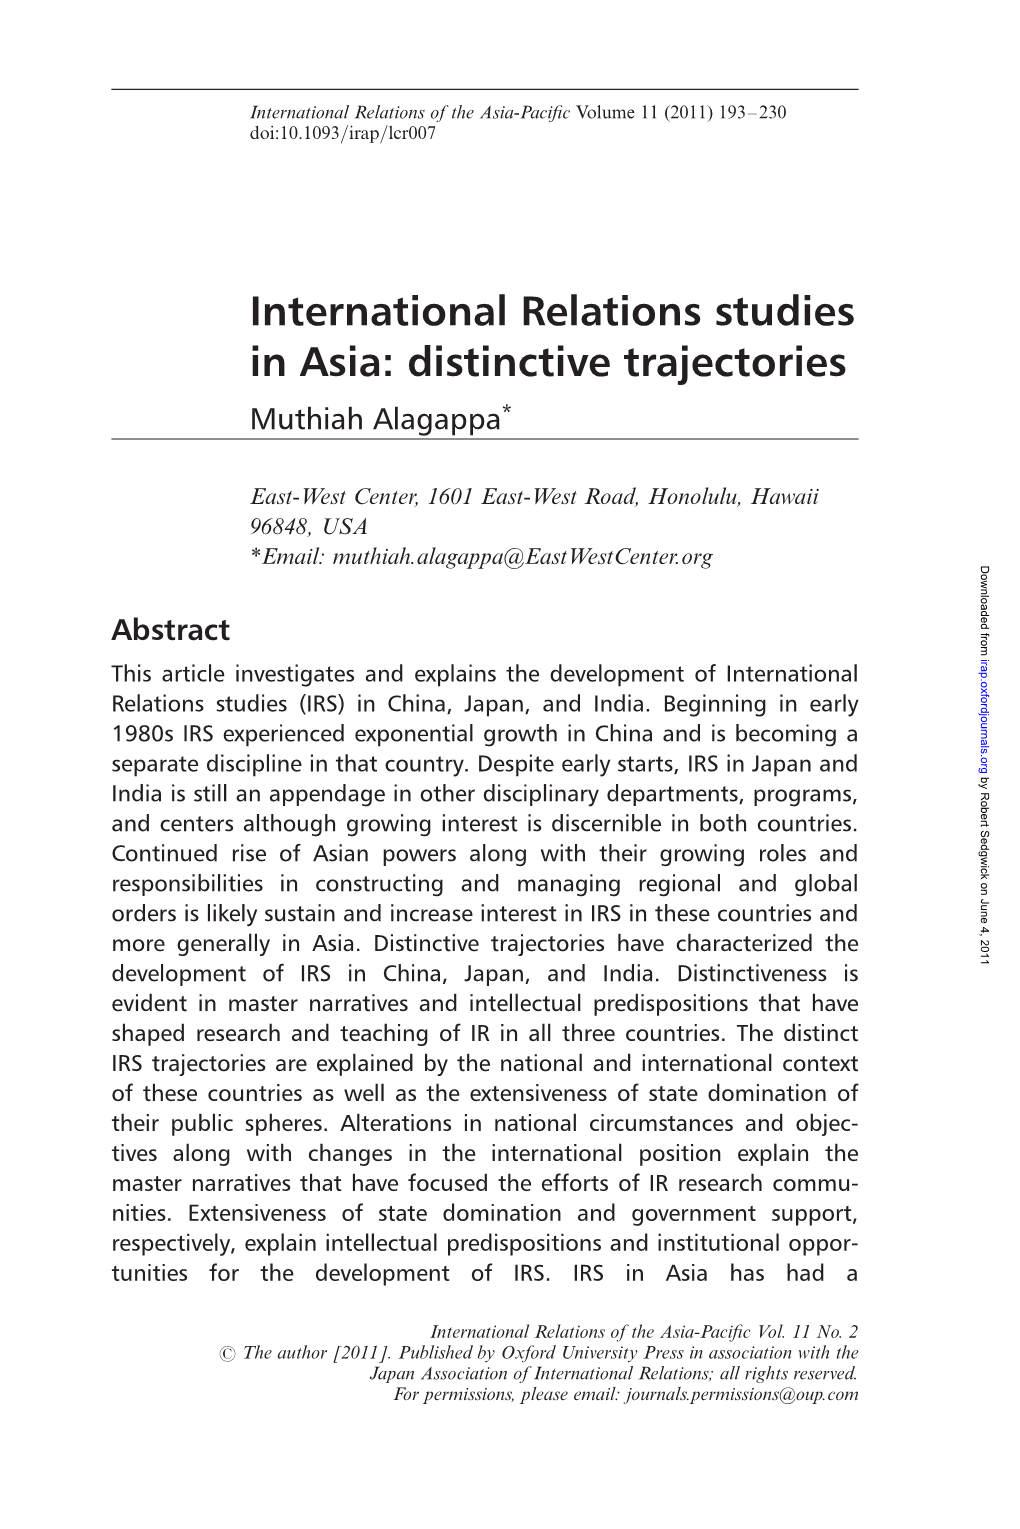 International Relations Studies in Asia: Distinctive Trajectories Muthiah Alagappa*